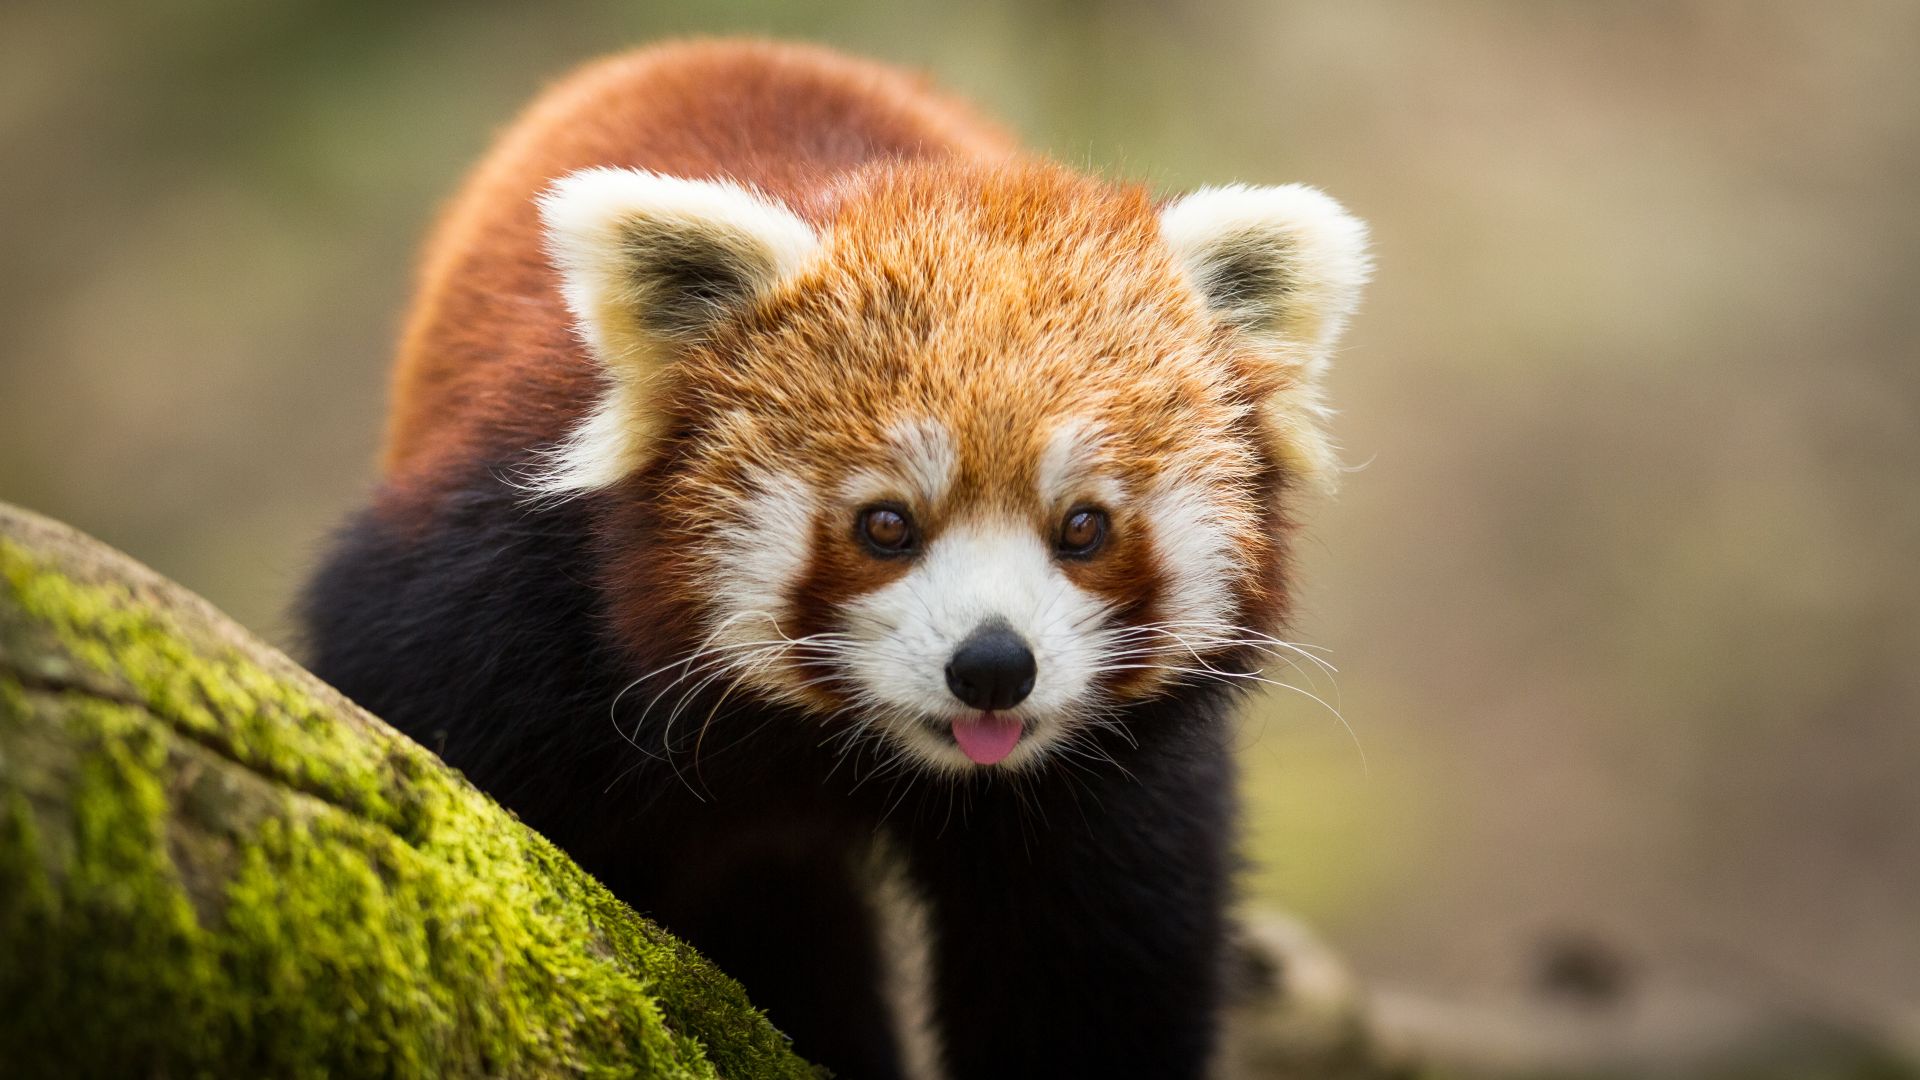 Panda roux : la peluche vivante